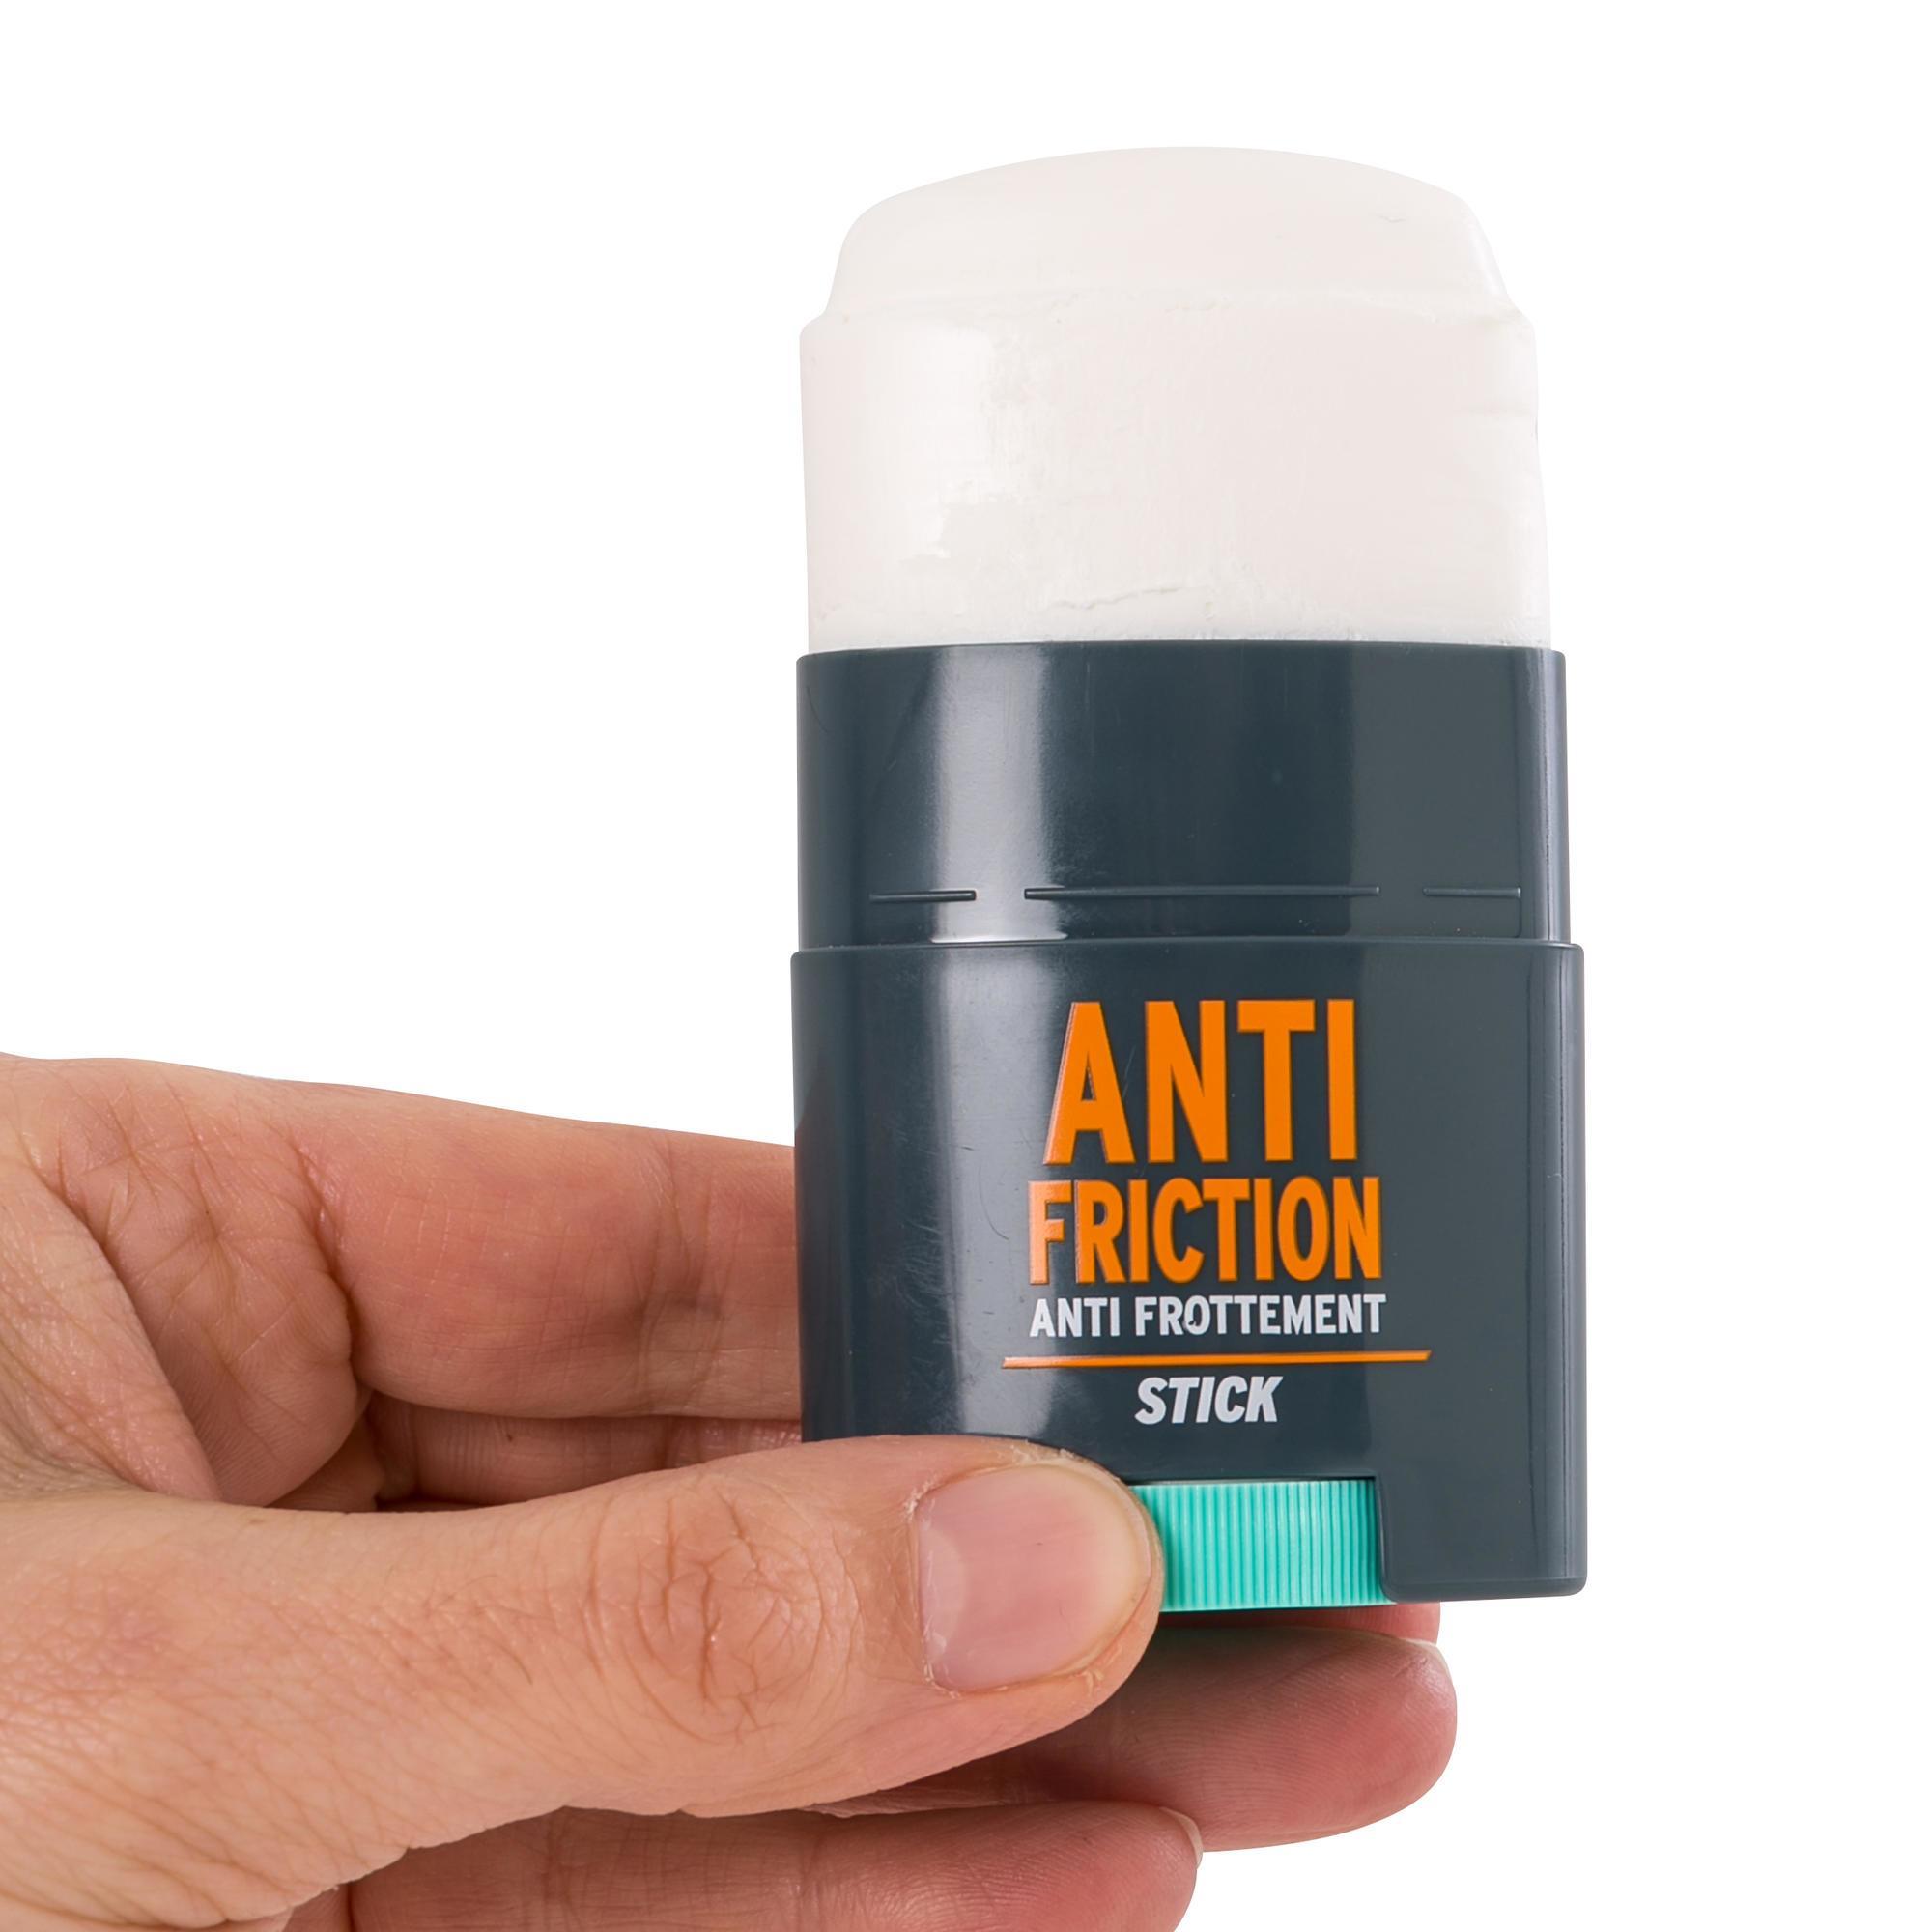 anti friction aptonia